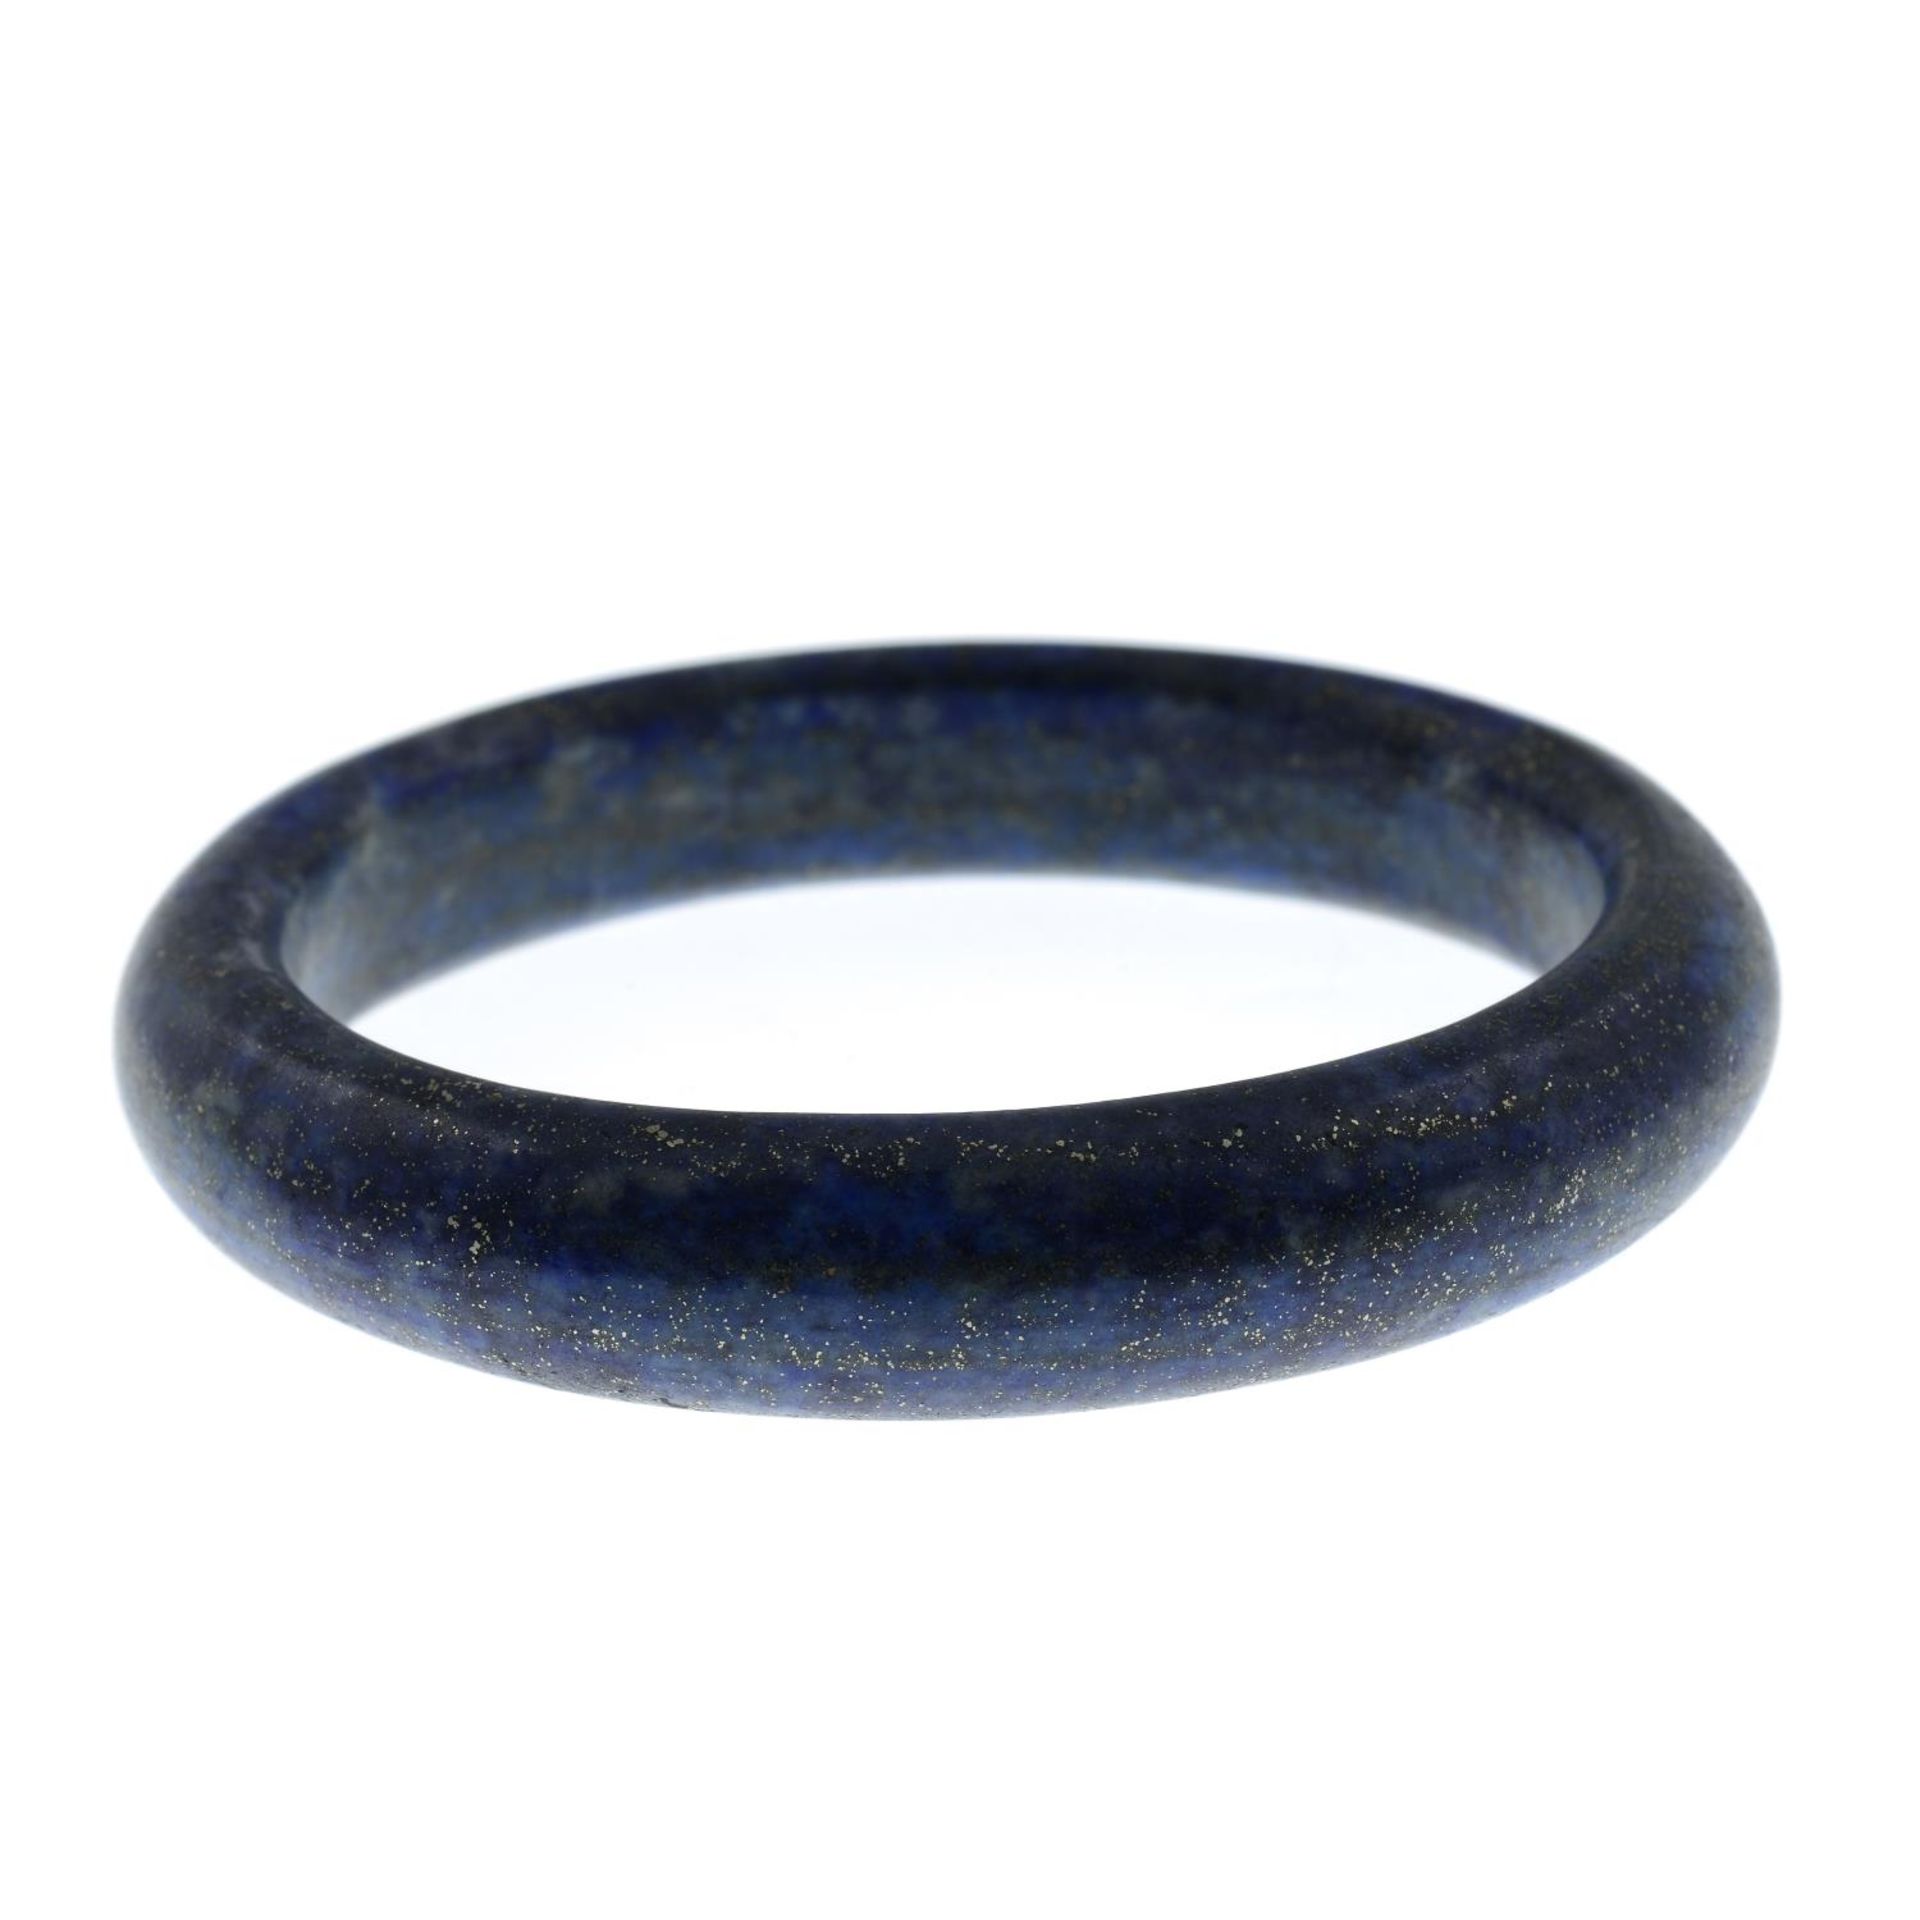 A lapis lazuli bangle.Inner diameter 6.1cms.